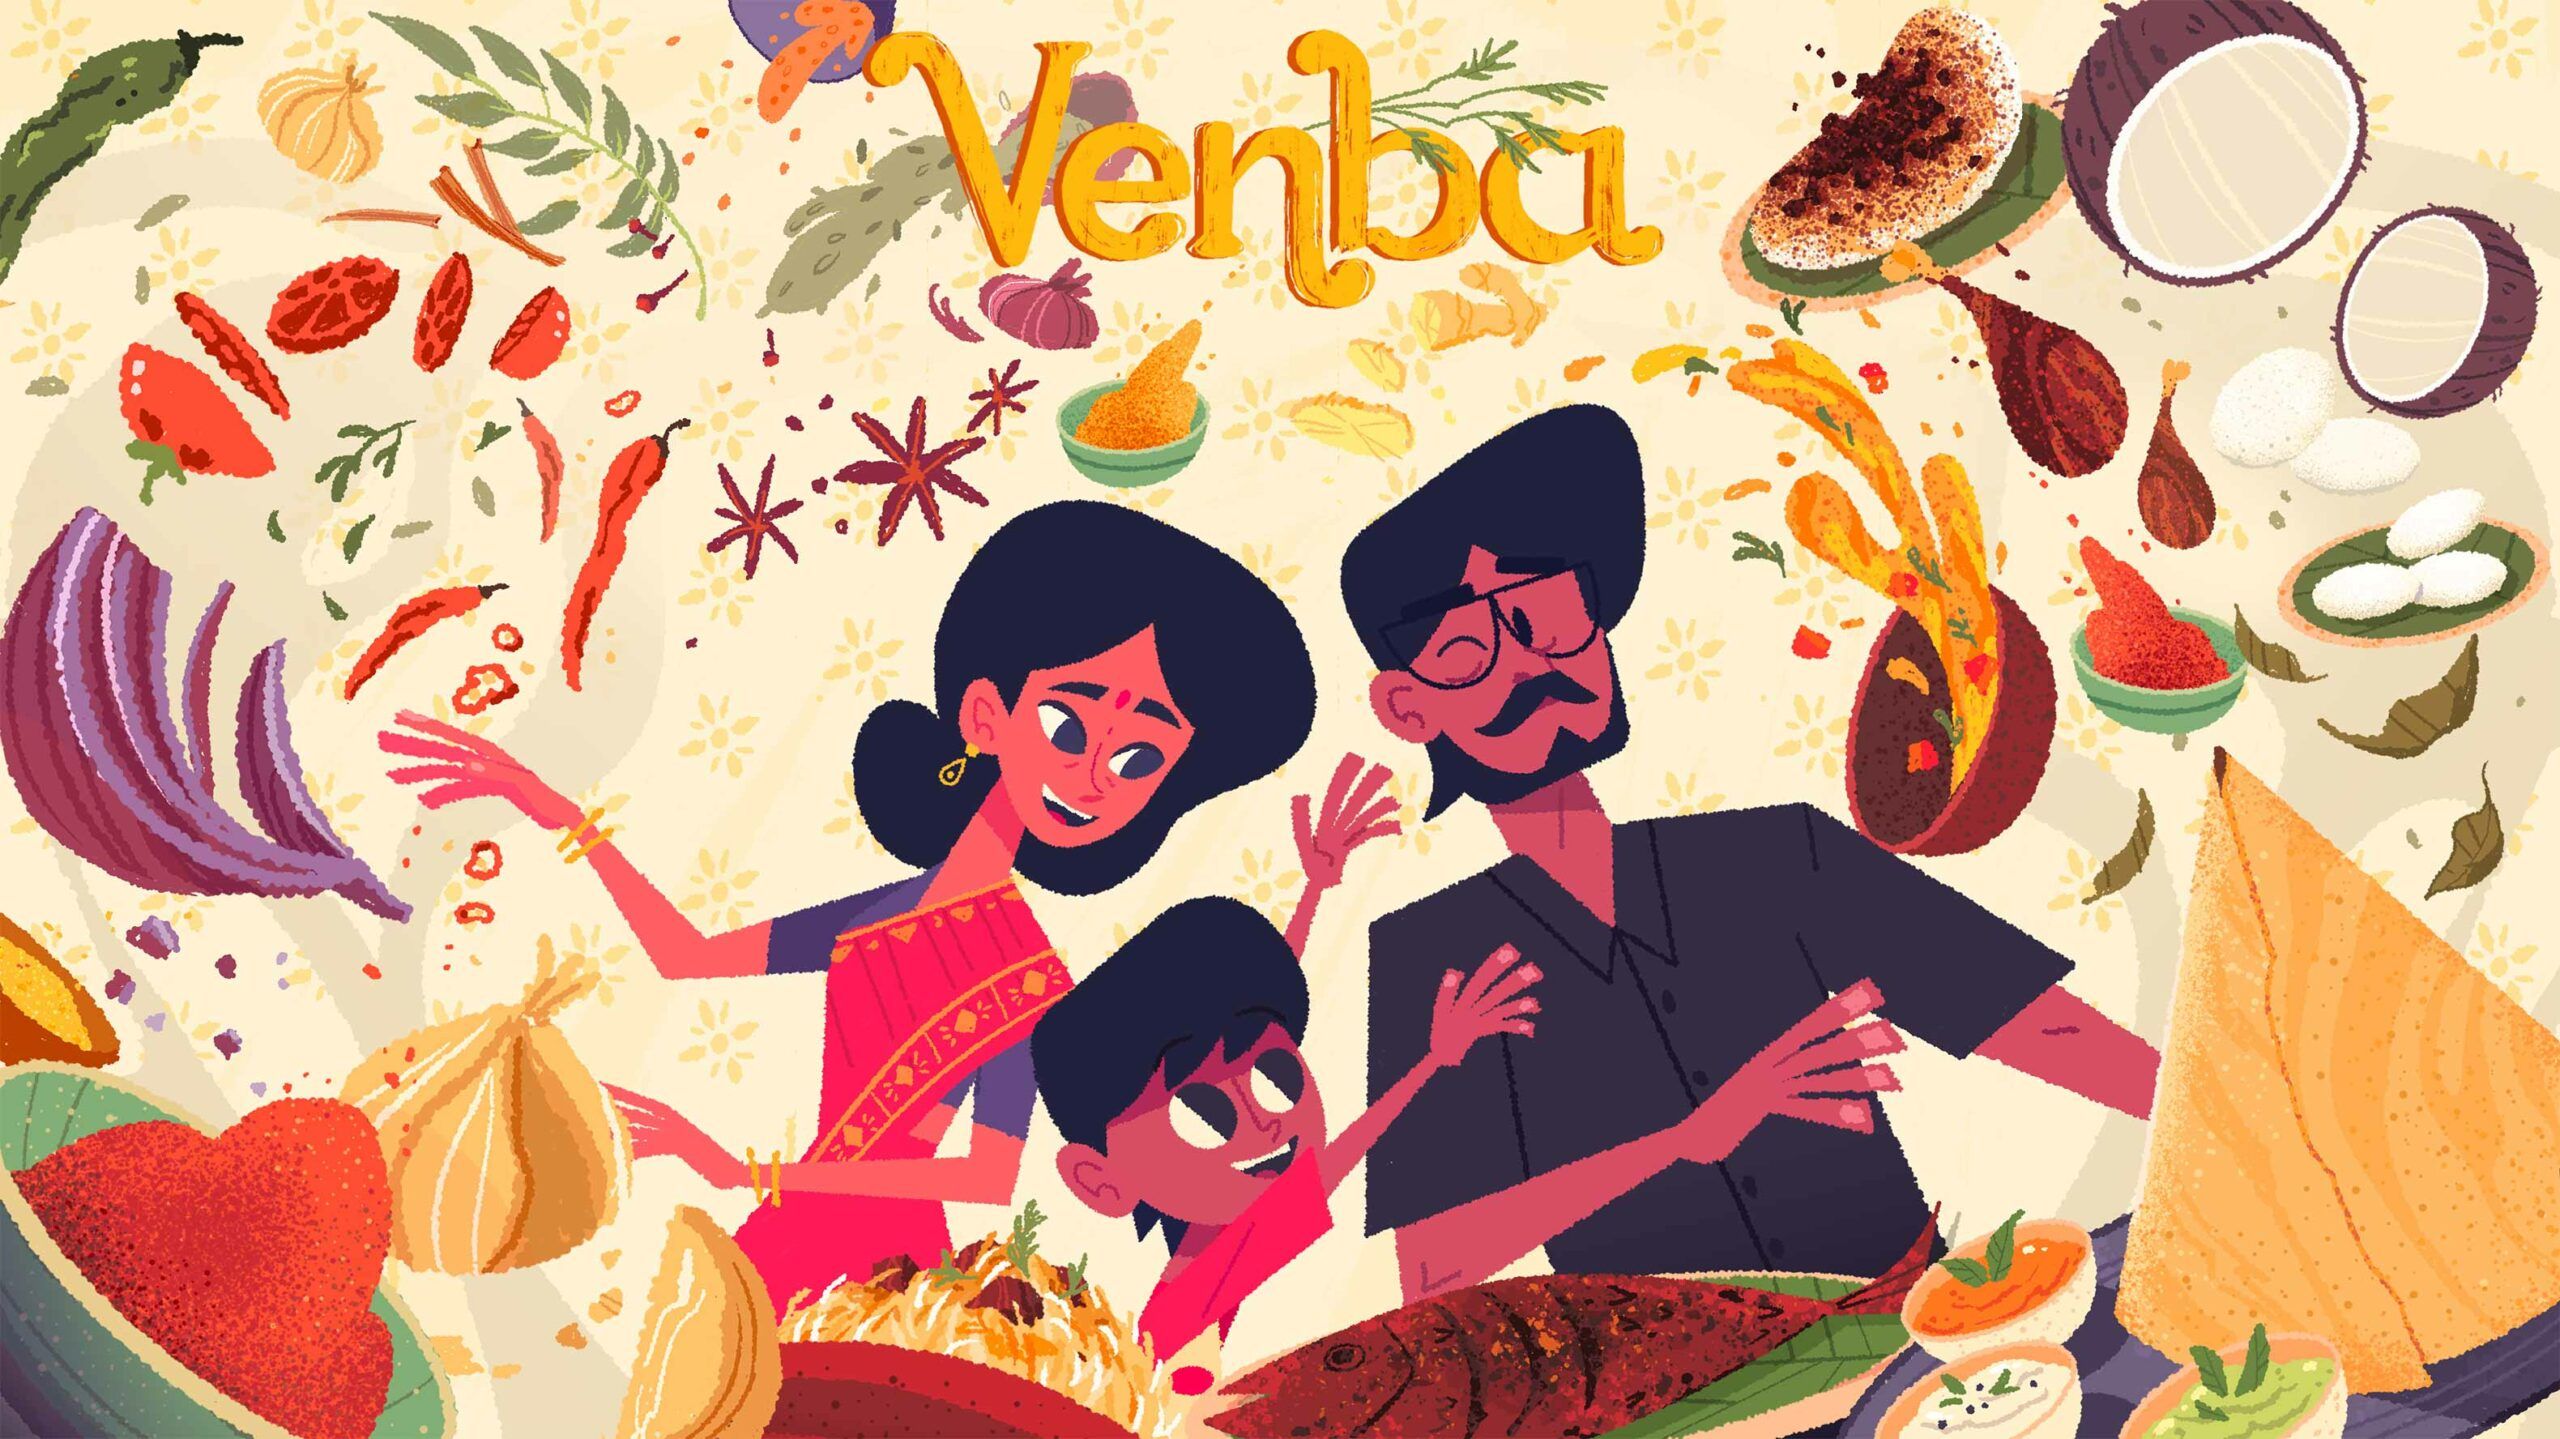 the header image for Venba